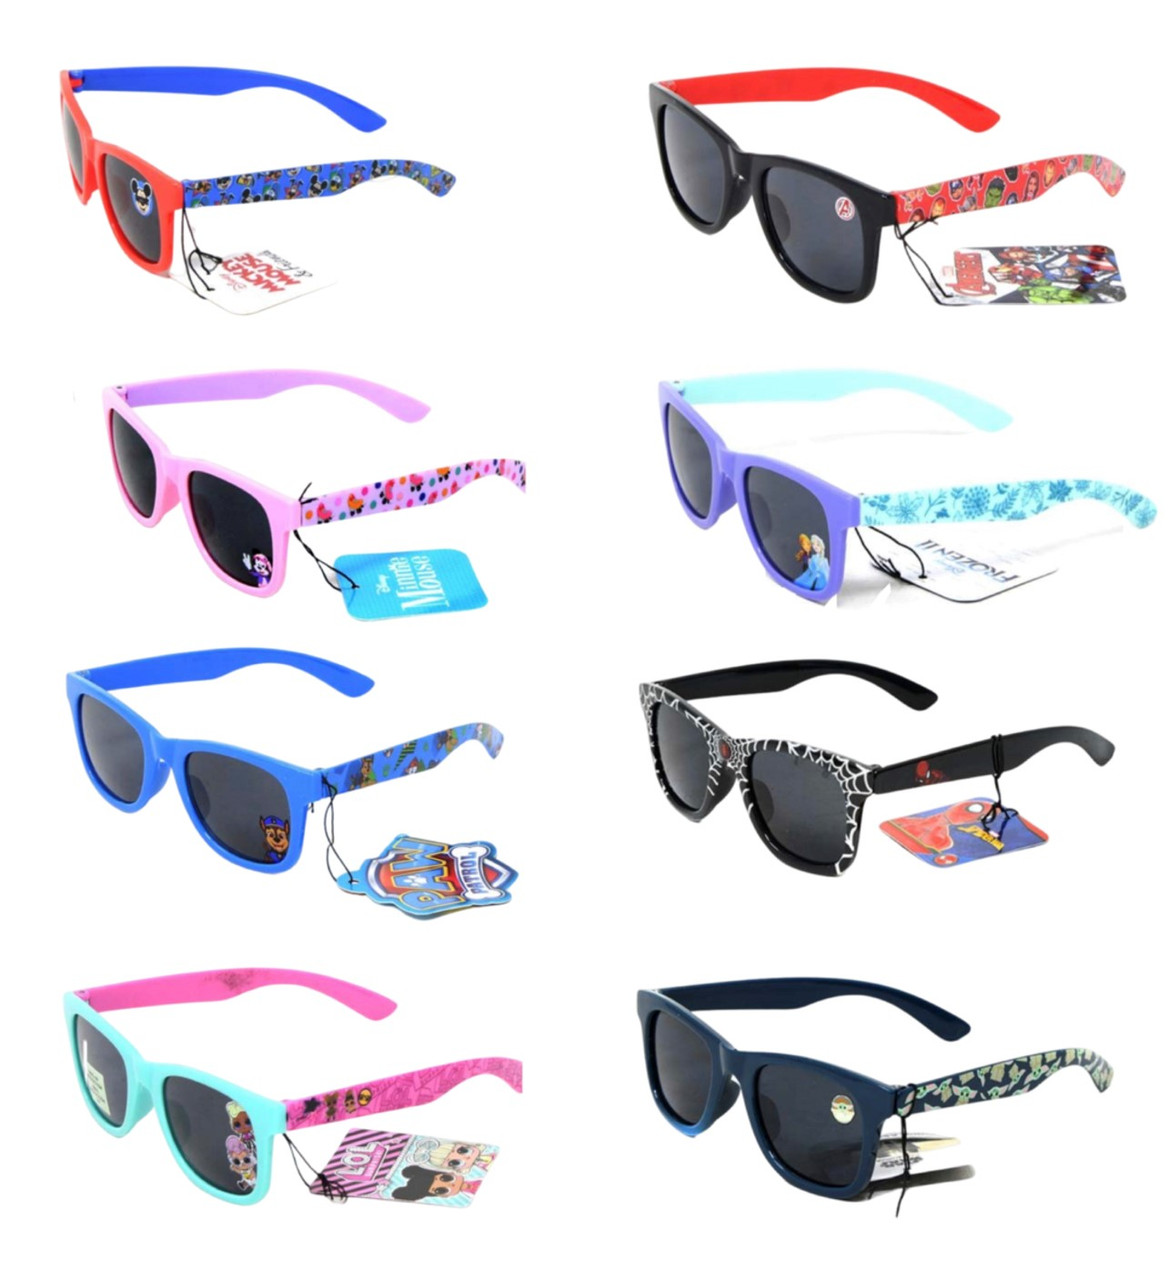 Buy Kids Polarized Retro Sunglasses for Boys Girls Age 3-12 - Shatterproof  Rubberized Frame UV Protection Toddler Children Sun Glasses at Amazon.in